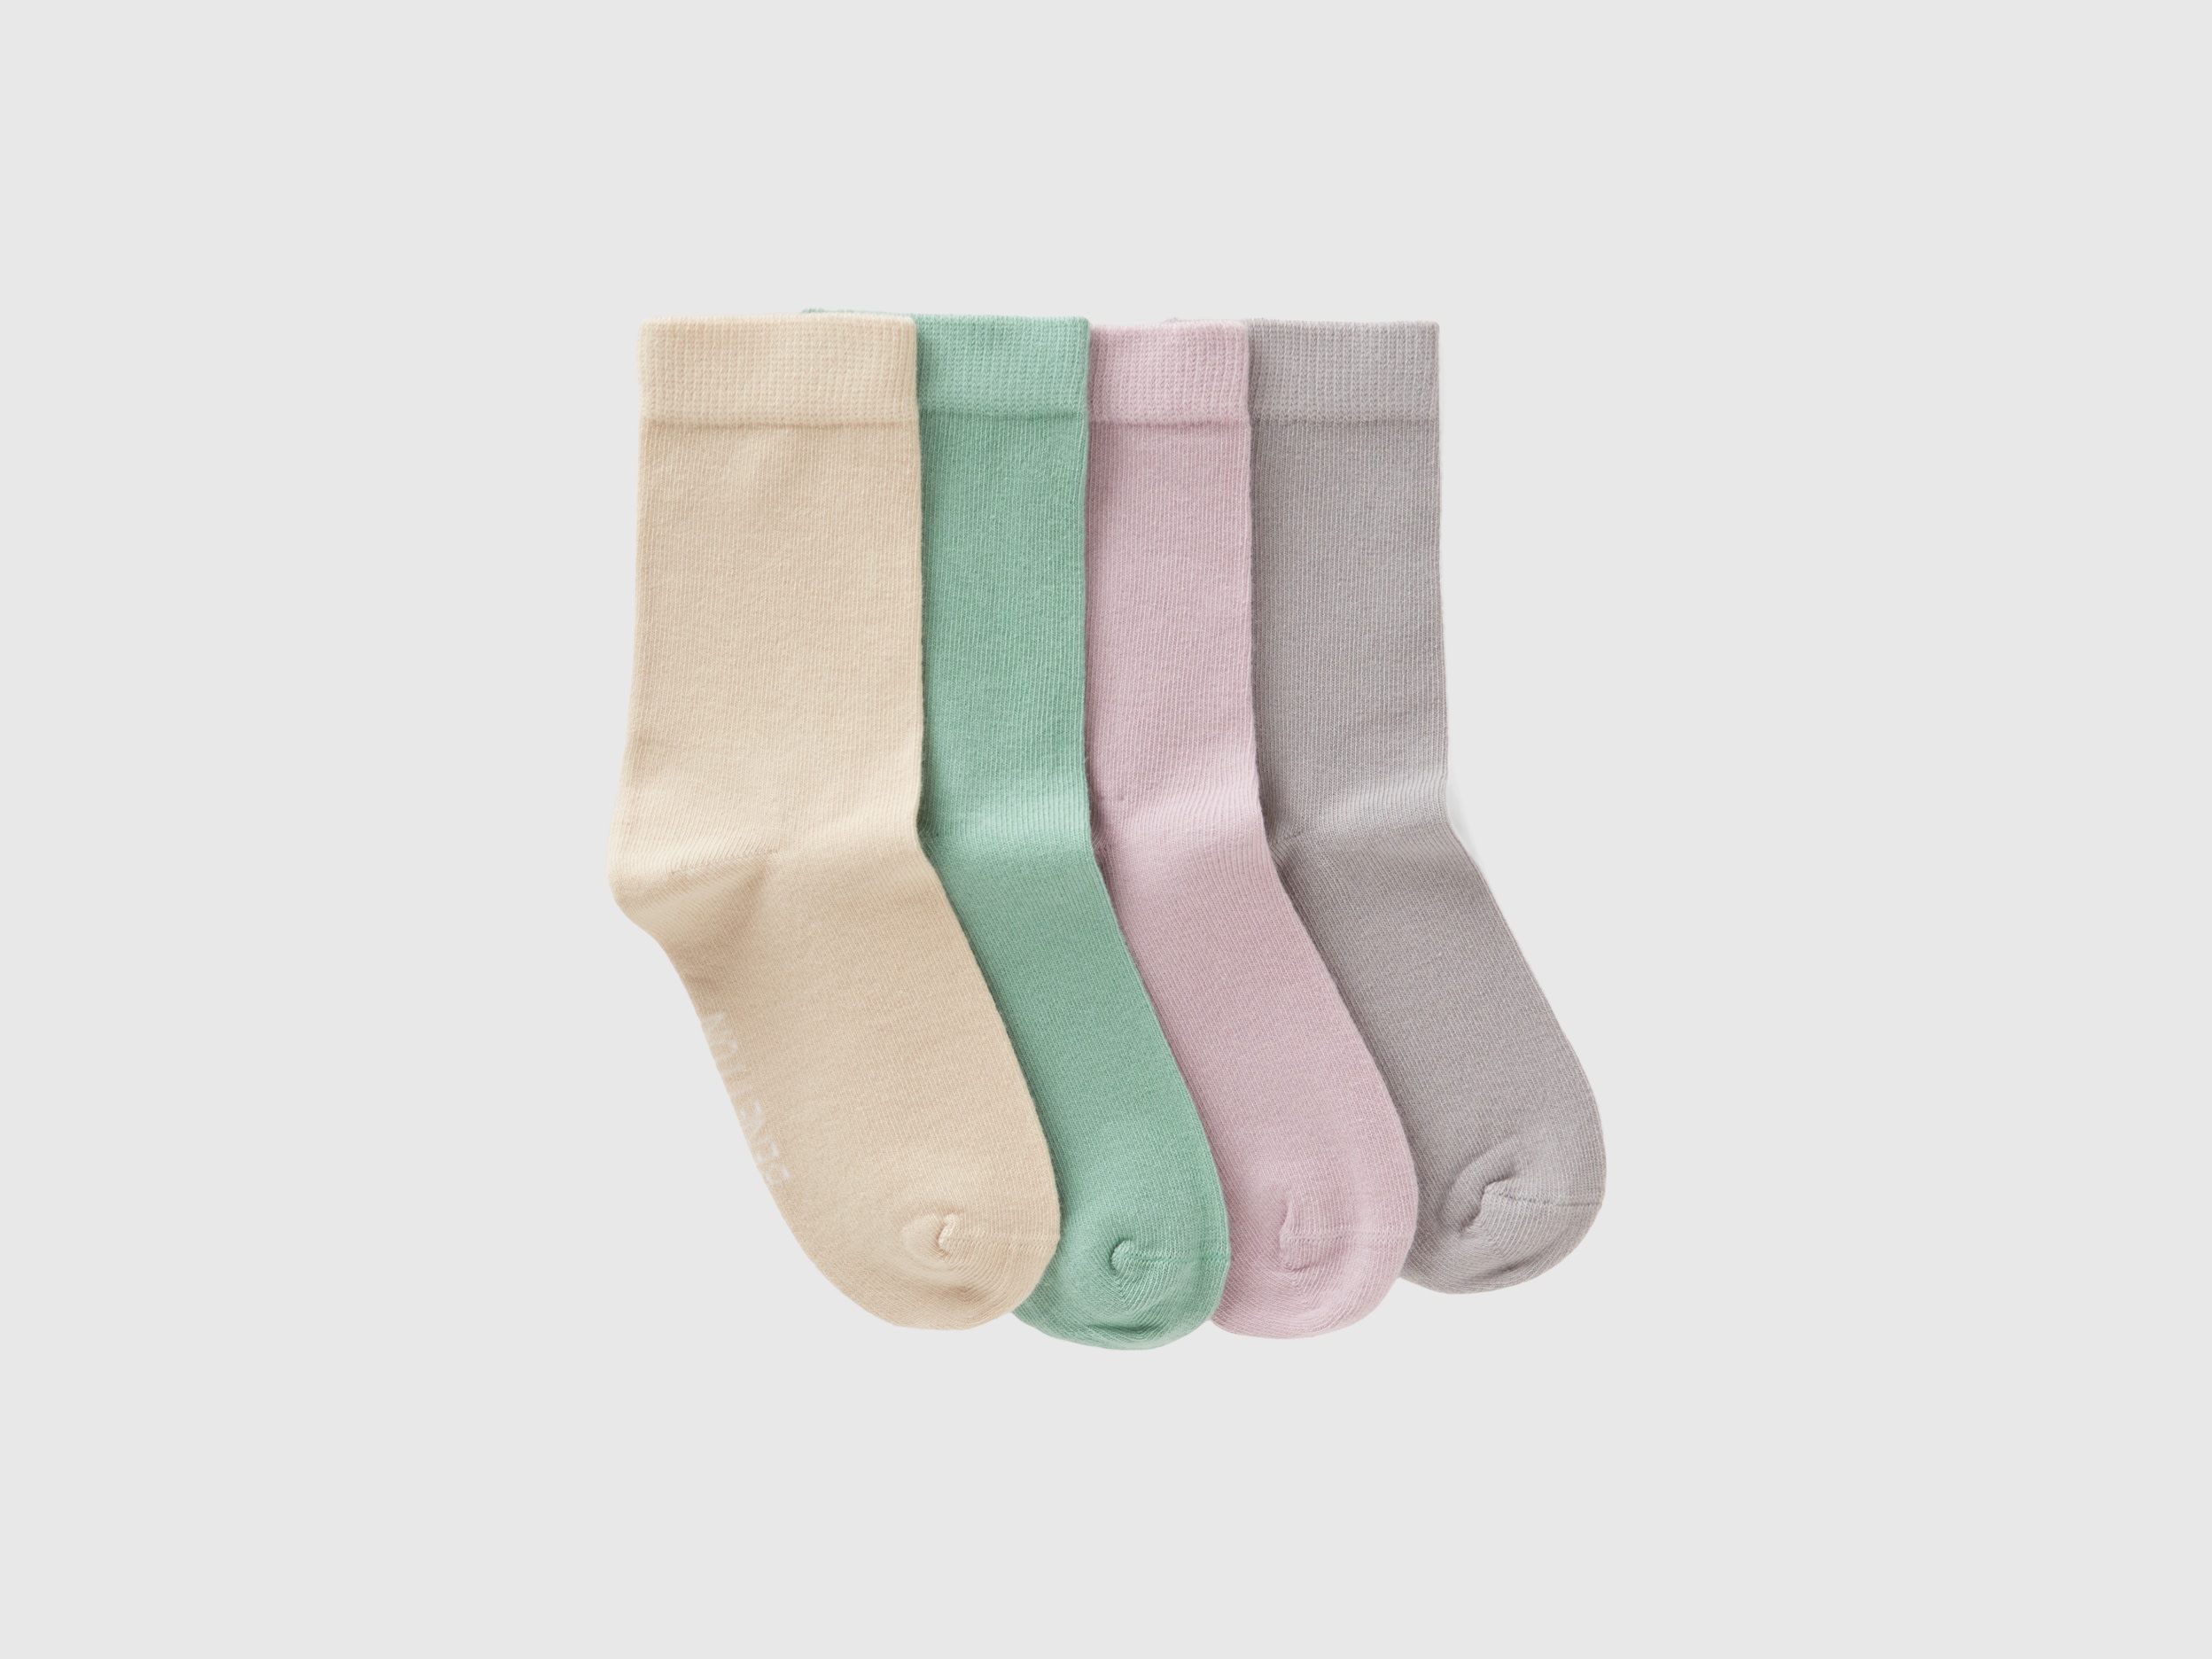 Benetton, Sock Set In Organic Stretch Cotton Blend, size 5-8, Multi-color, Kids